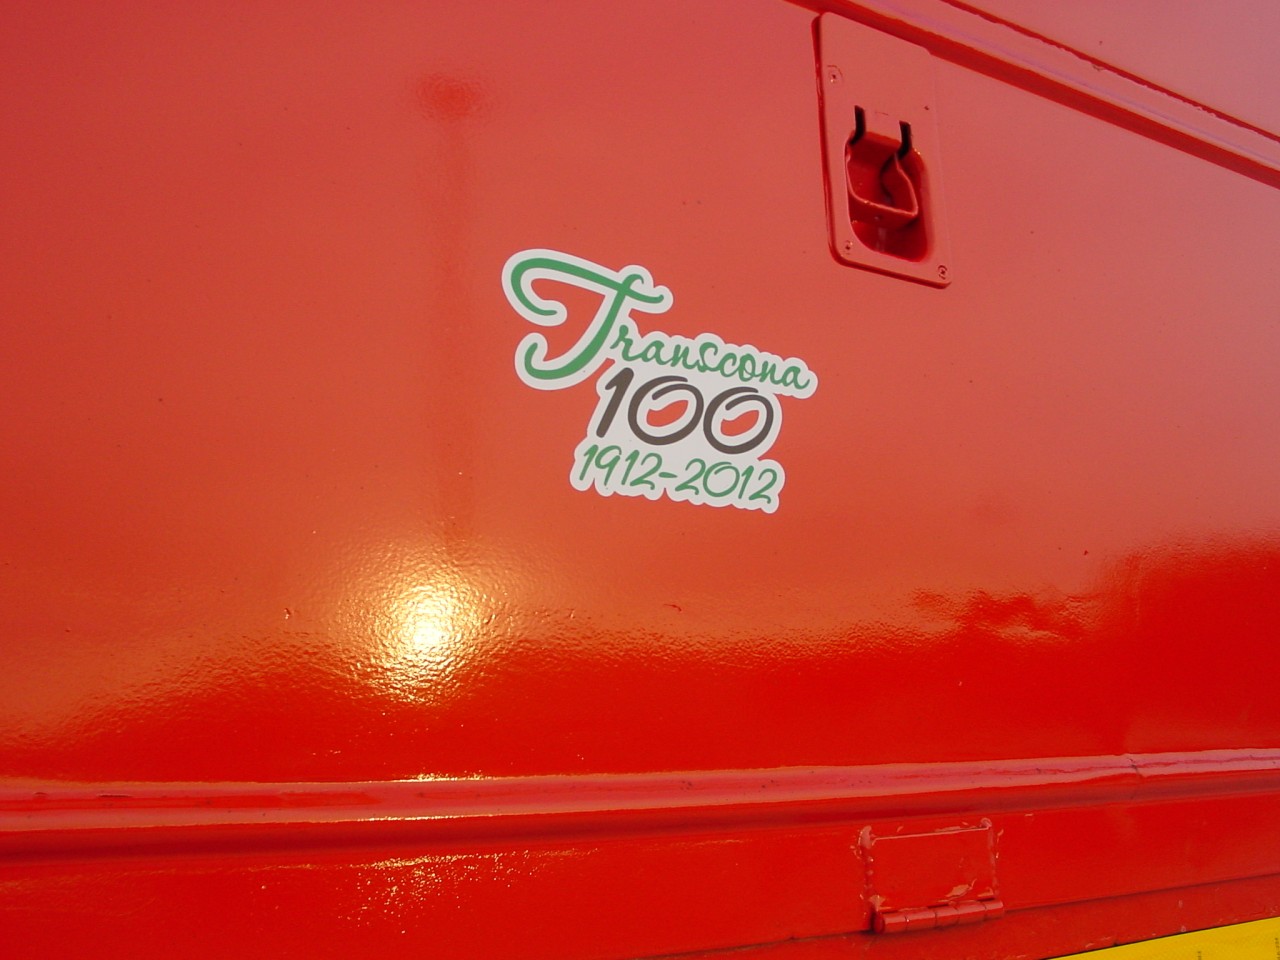 100 year logo on CN 7501